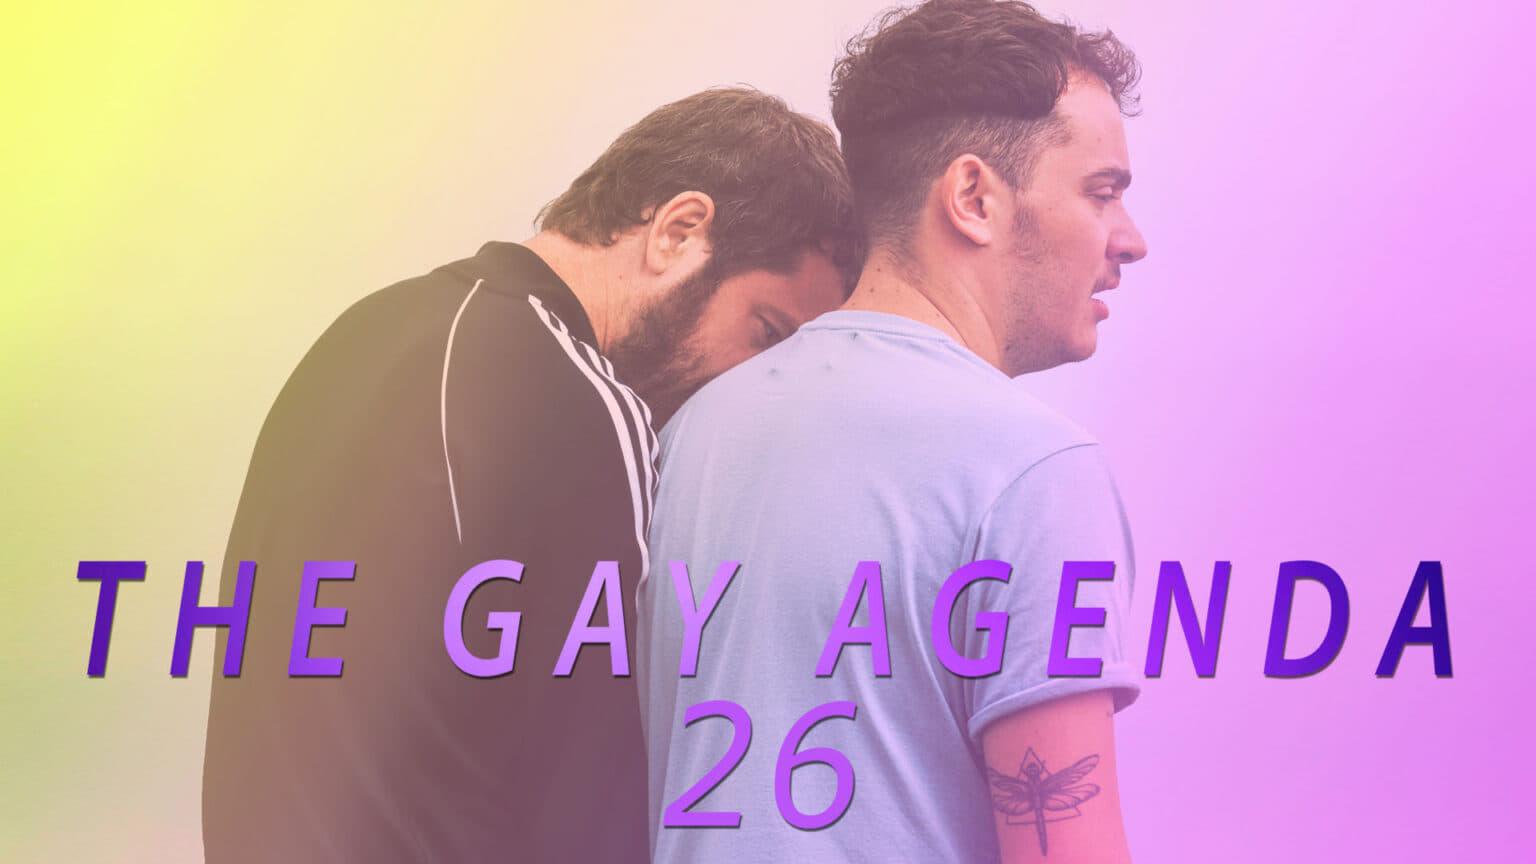 The Gay Agenda 26 backdrop